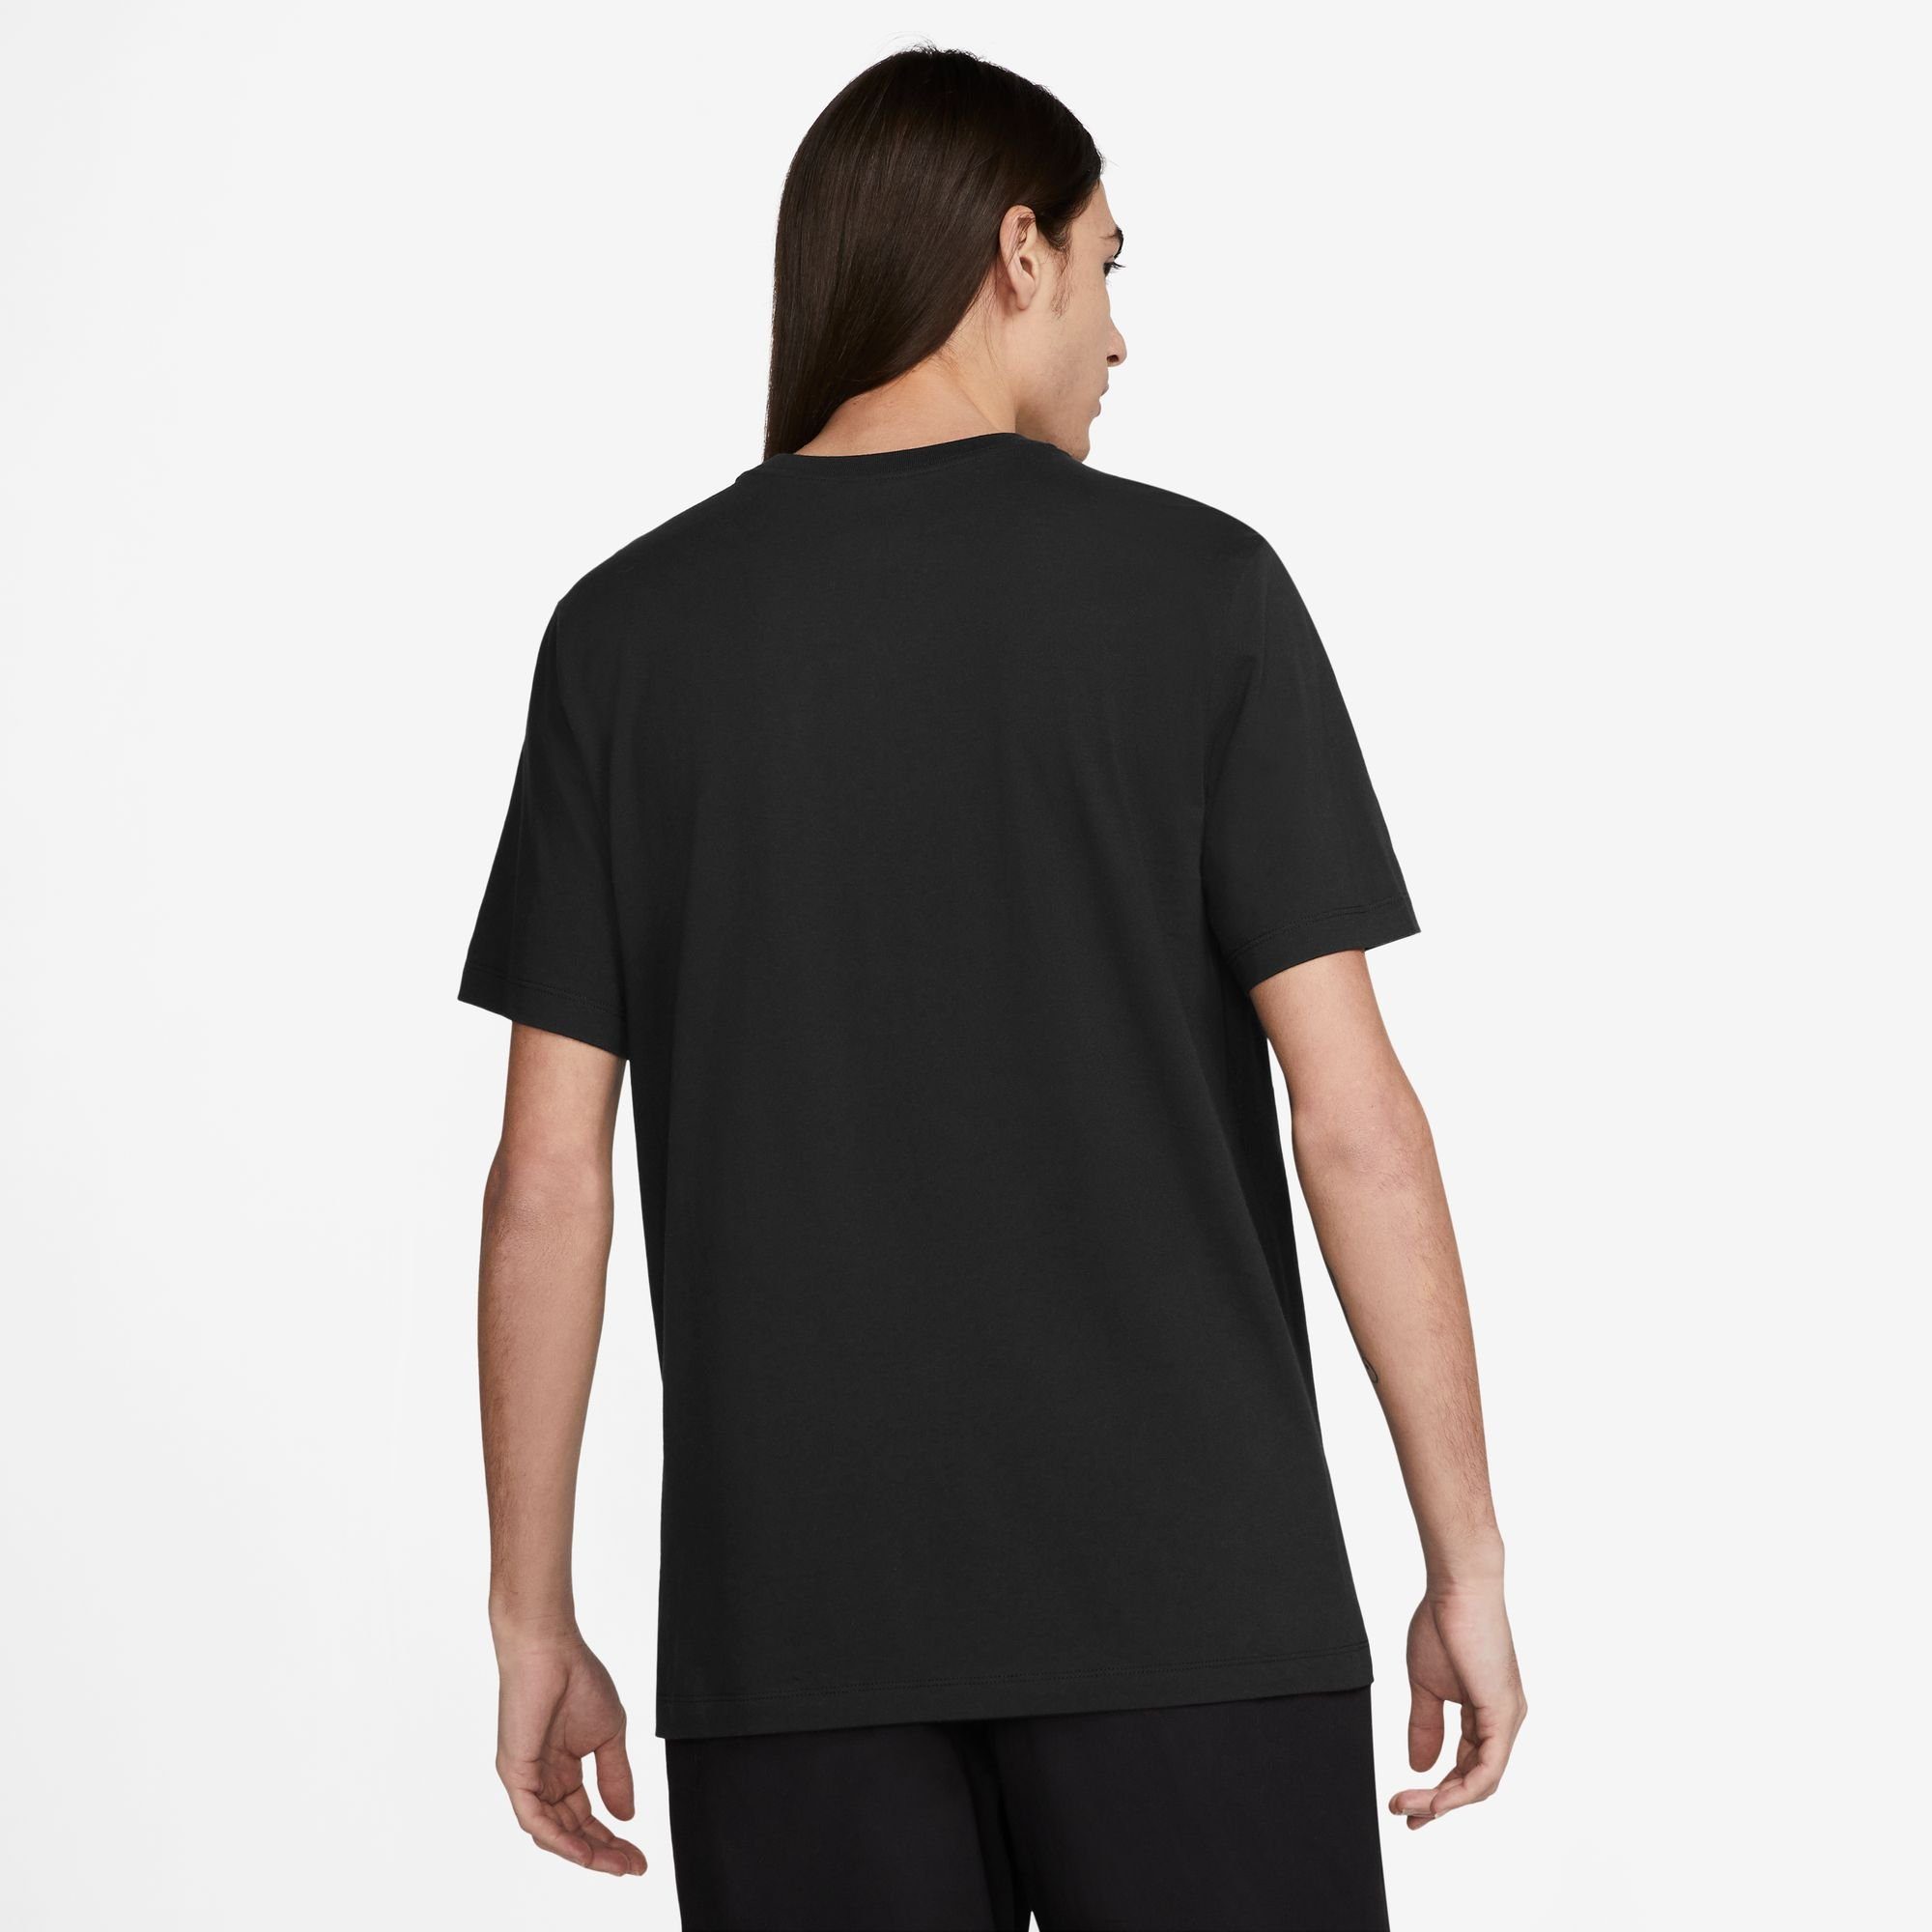 M V PACK Nike NSW schwarz TEE OC Sportswear T-Shirt